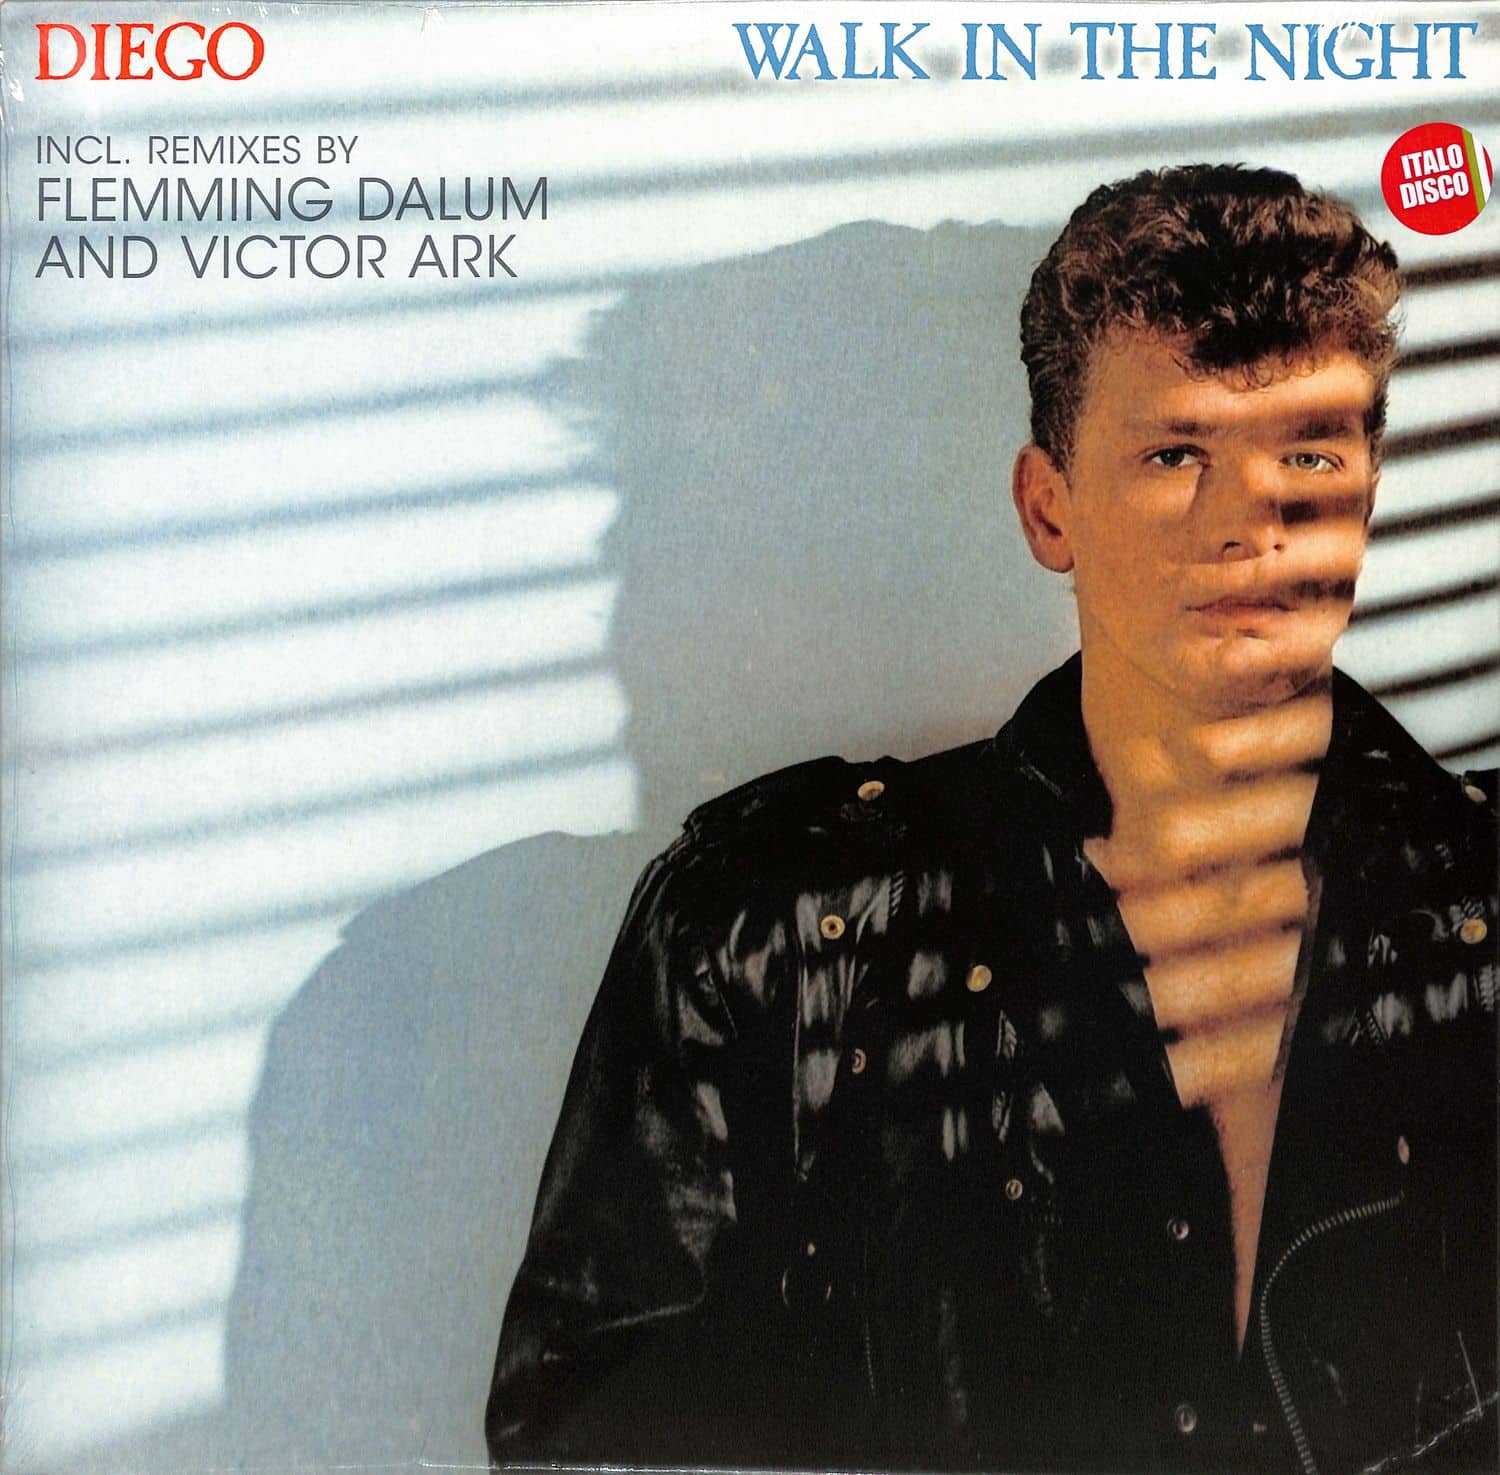 Diego - WALK IN THE NIGHT